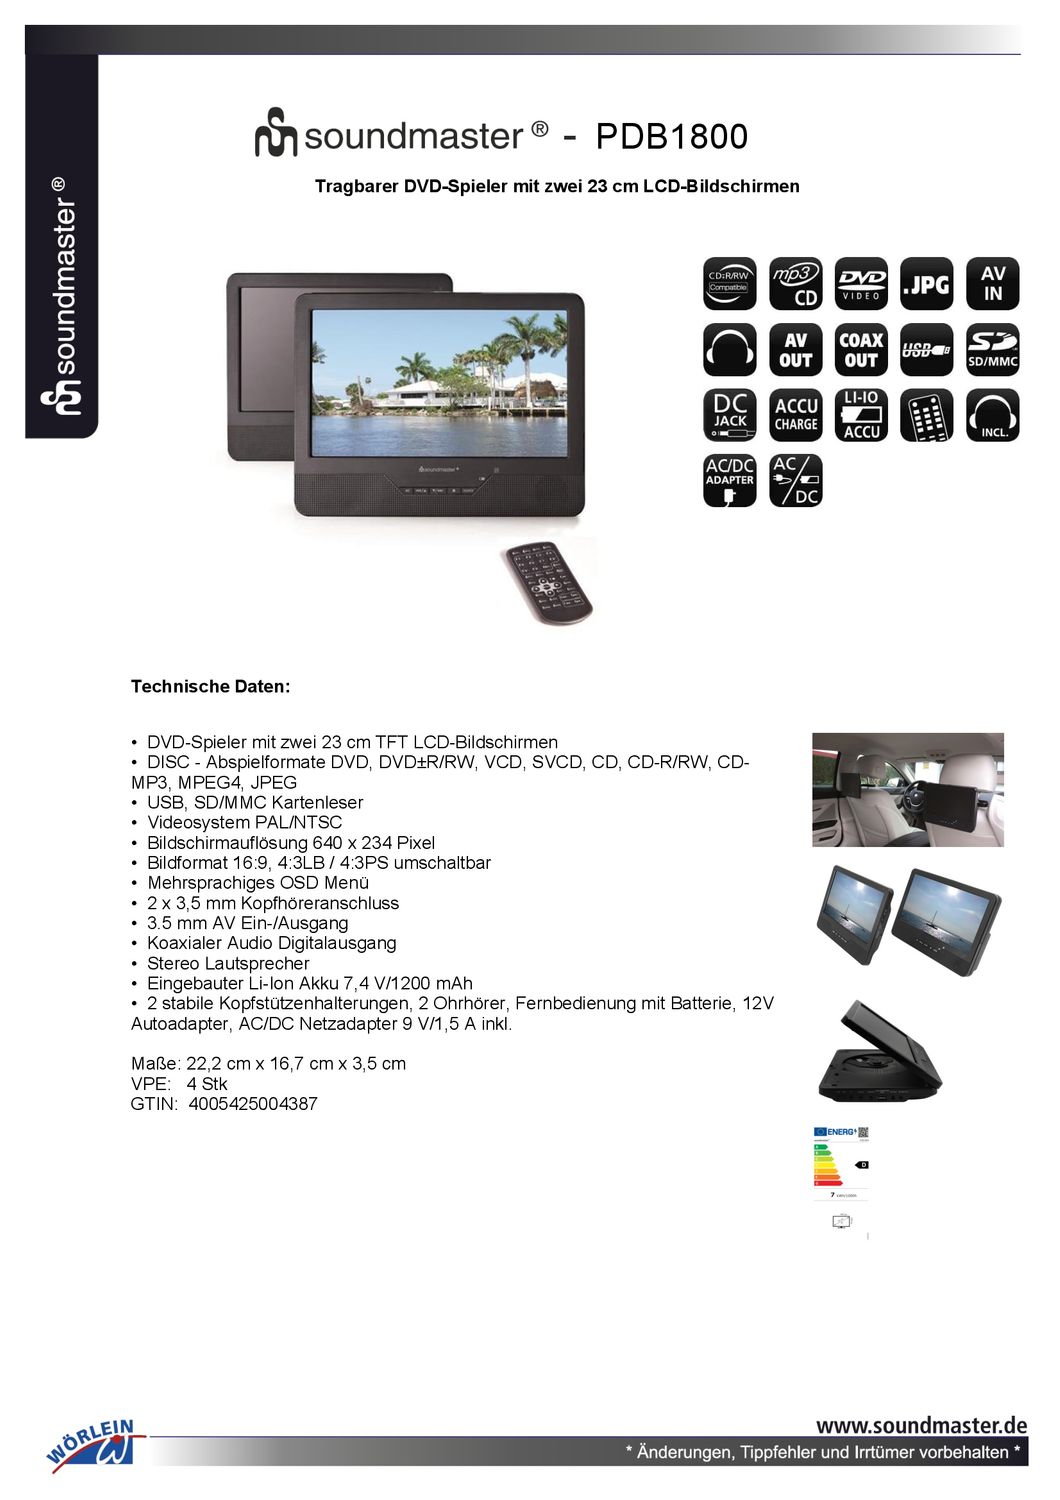 Soundmaster PDB1800 portabler DVD-Player 2 Monitore TFT Bildschirm Kopfstützenhalterung eigebauter Akku LiPo